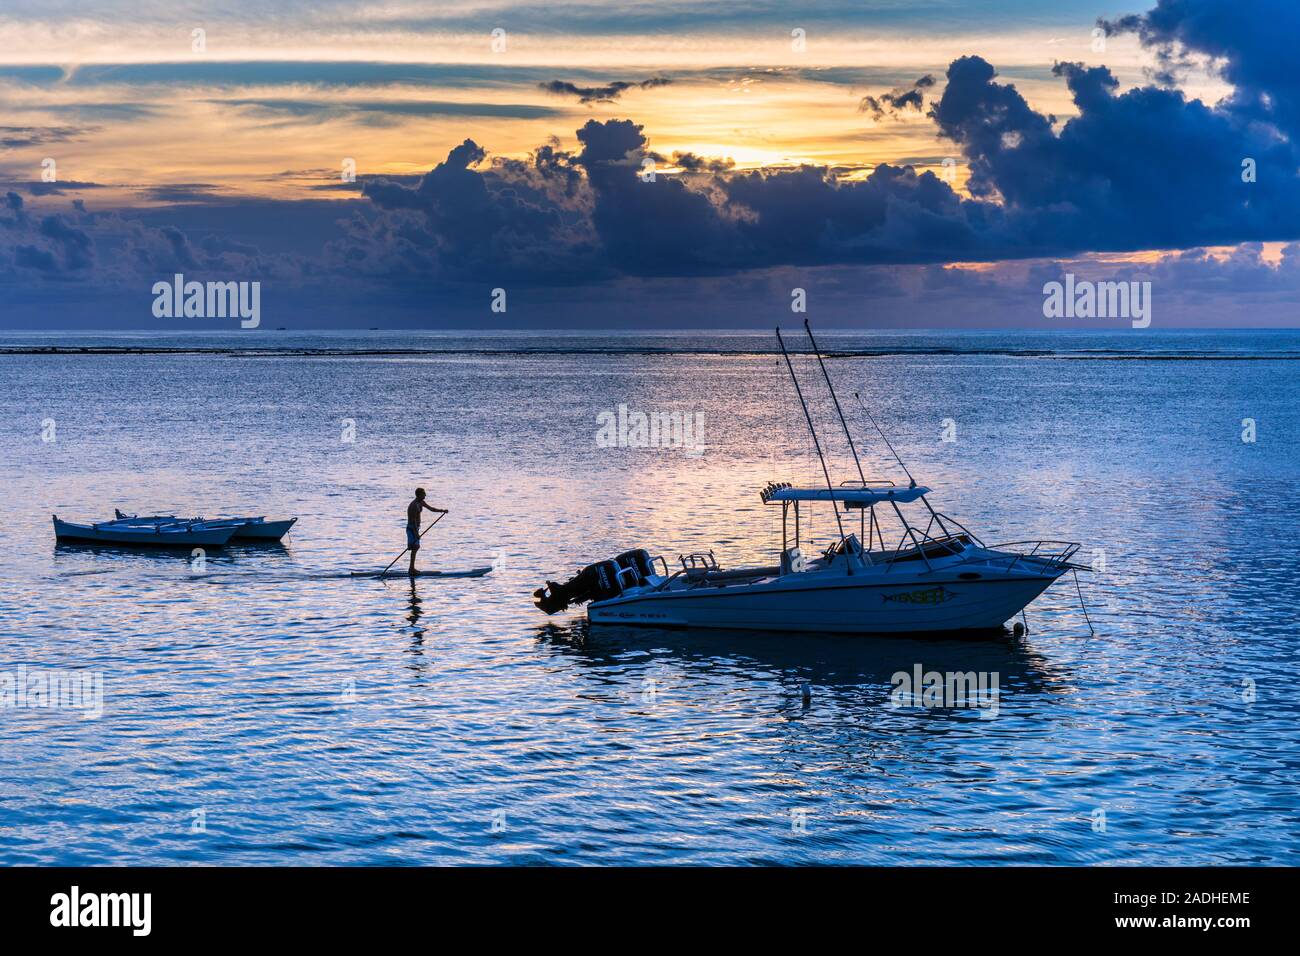 Stand-up paddle boarder off Riviere Noir o río negro playa, mico, Mauricio Islas Mascareñas. Foto de stock